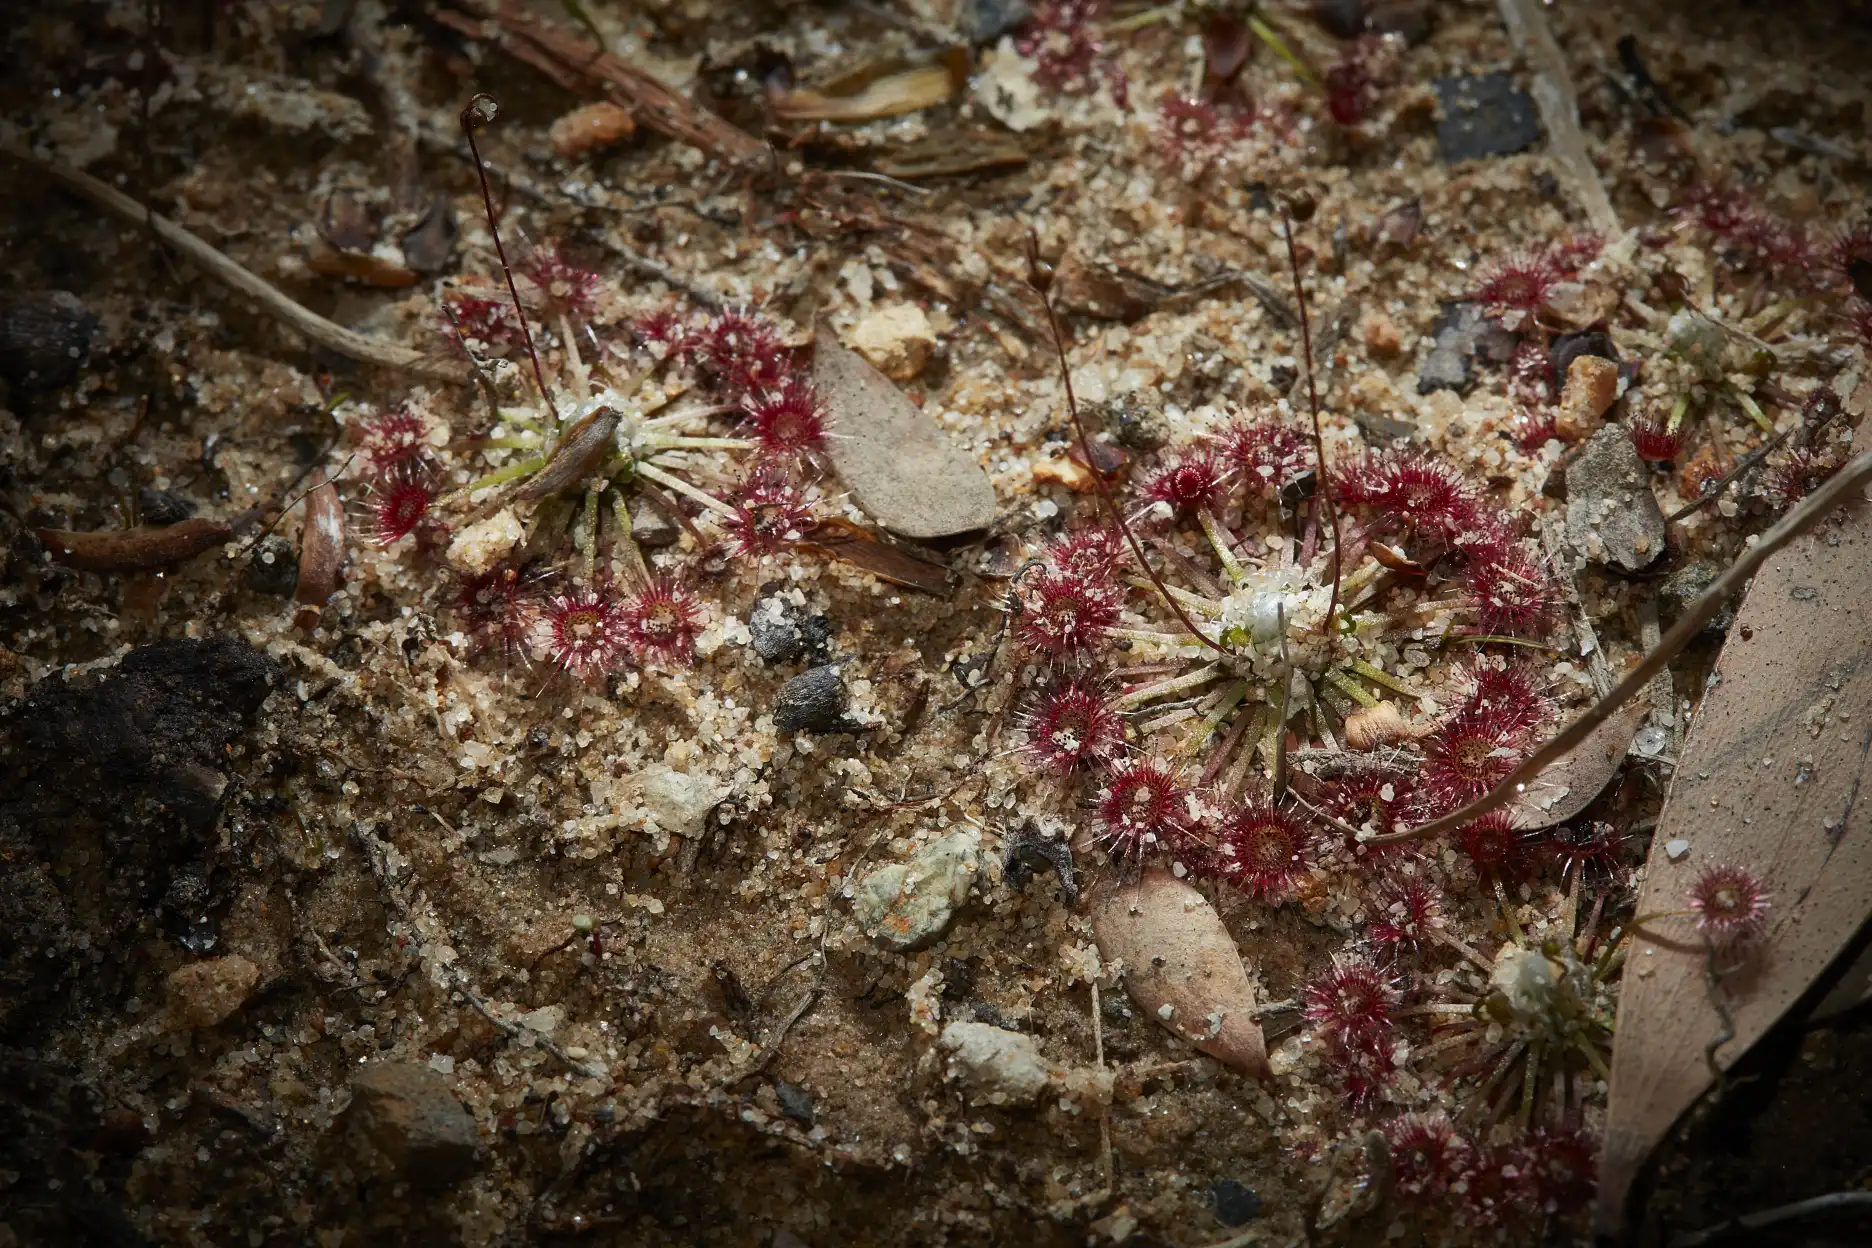 Drosera pygmea plants in sand at North Head, Australia